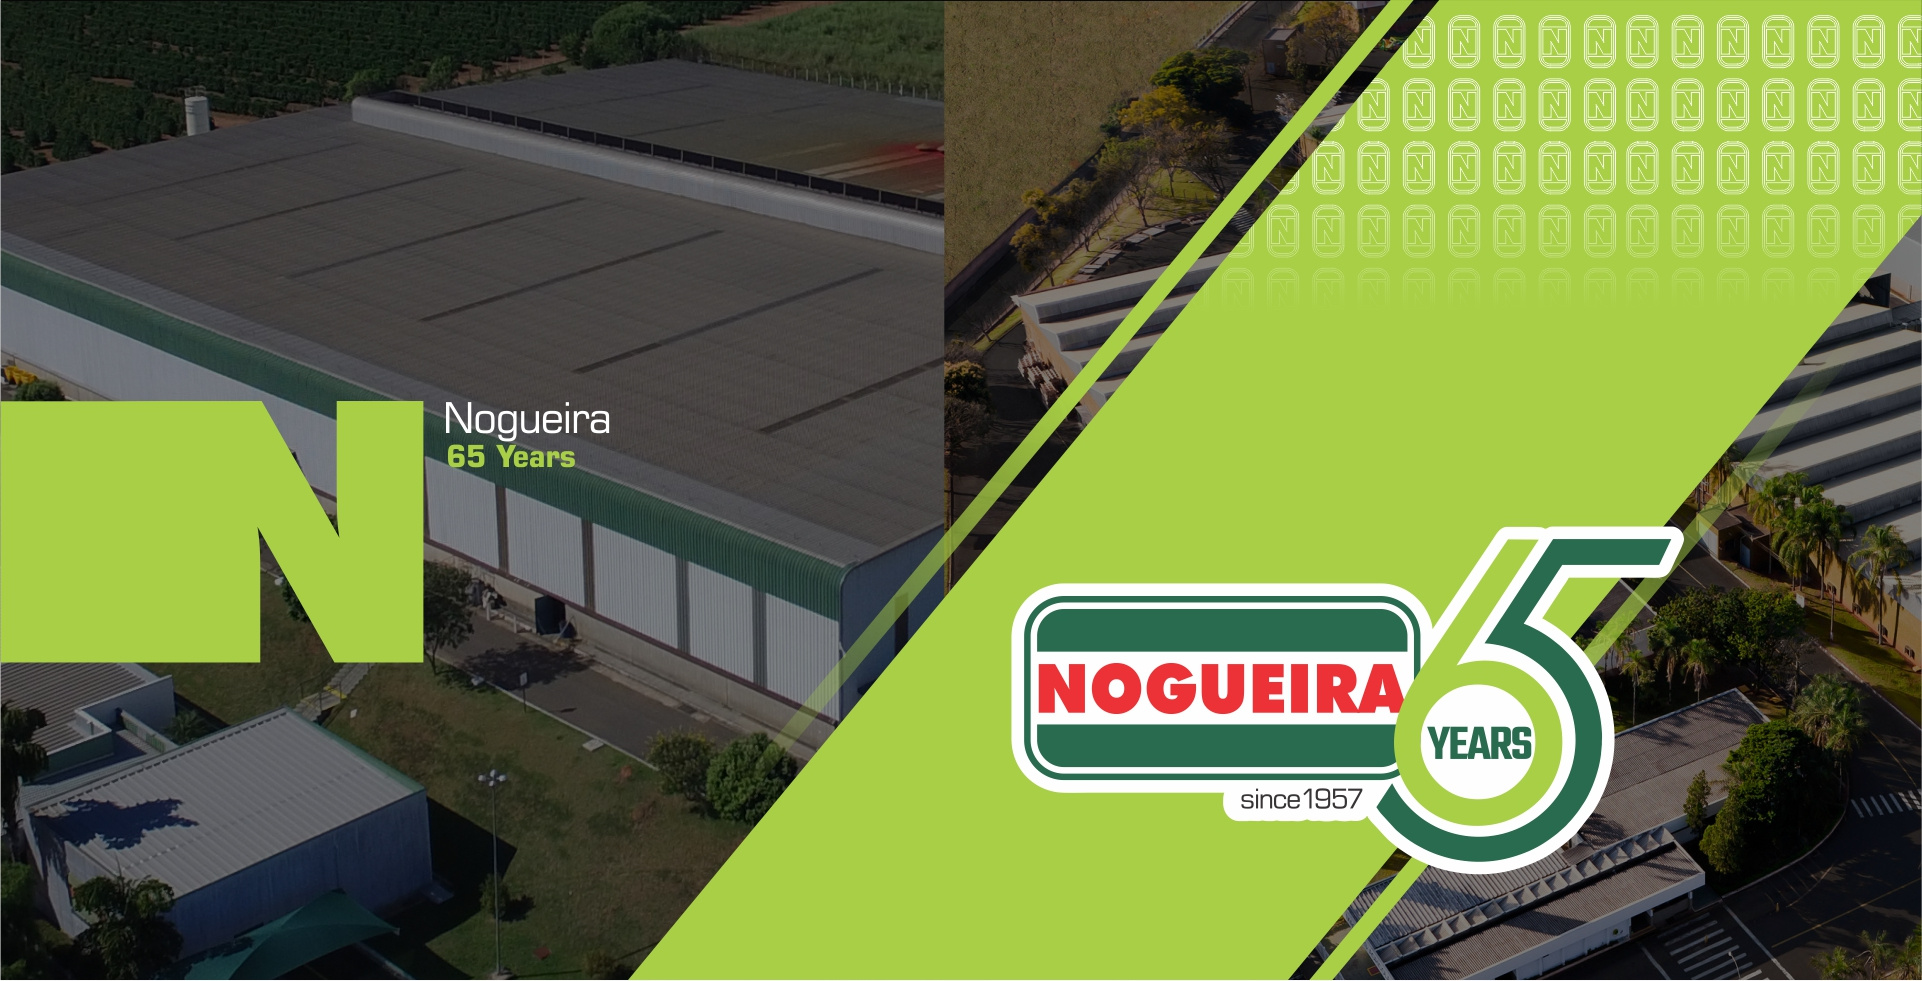 Nogueira - Essential in farming